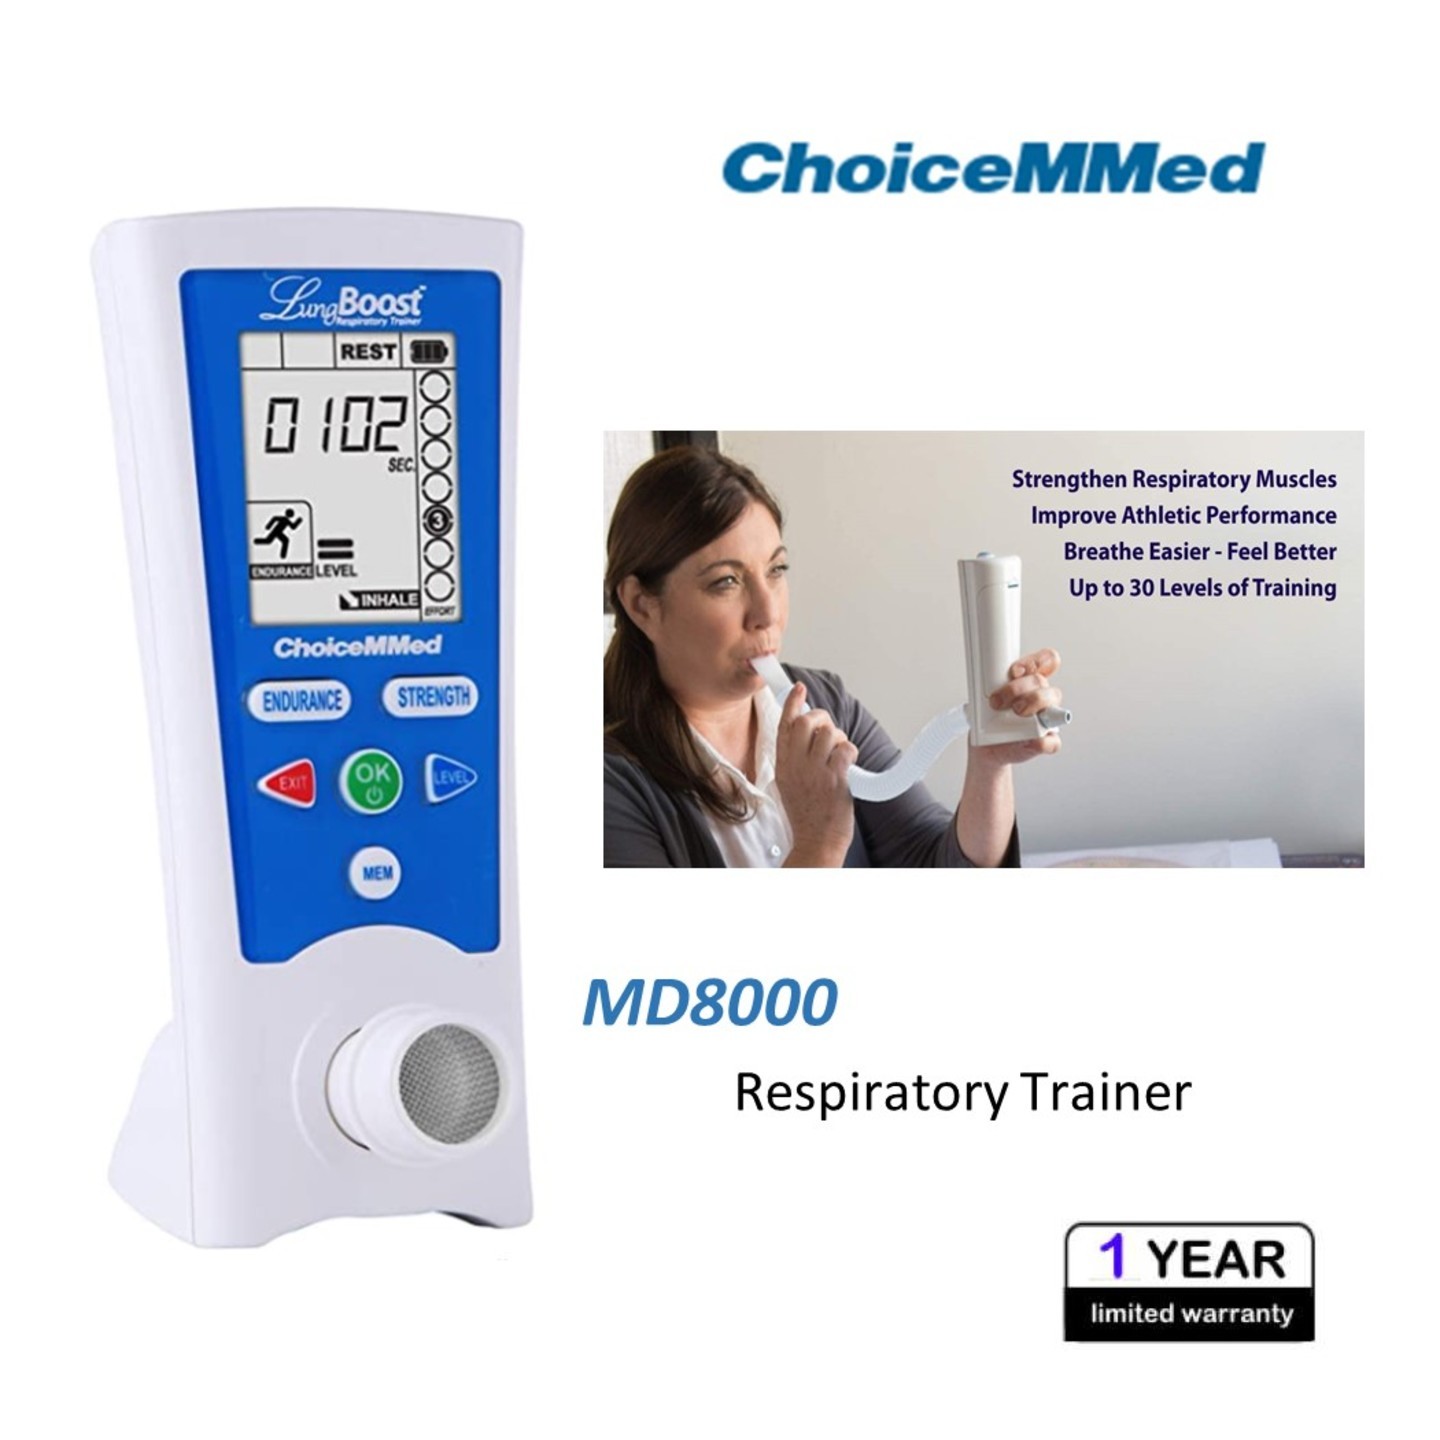 ChoiceMMed Respiratory Trainer - M8000